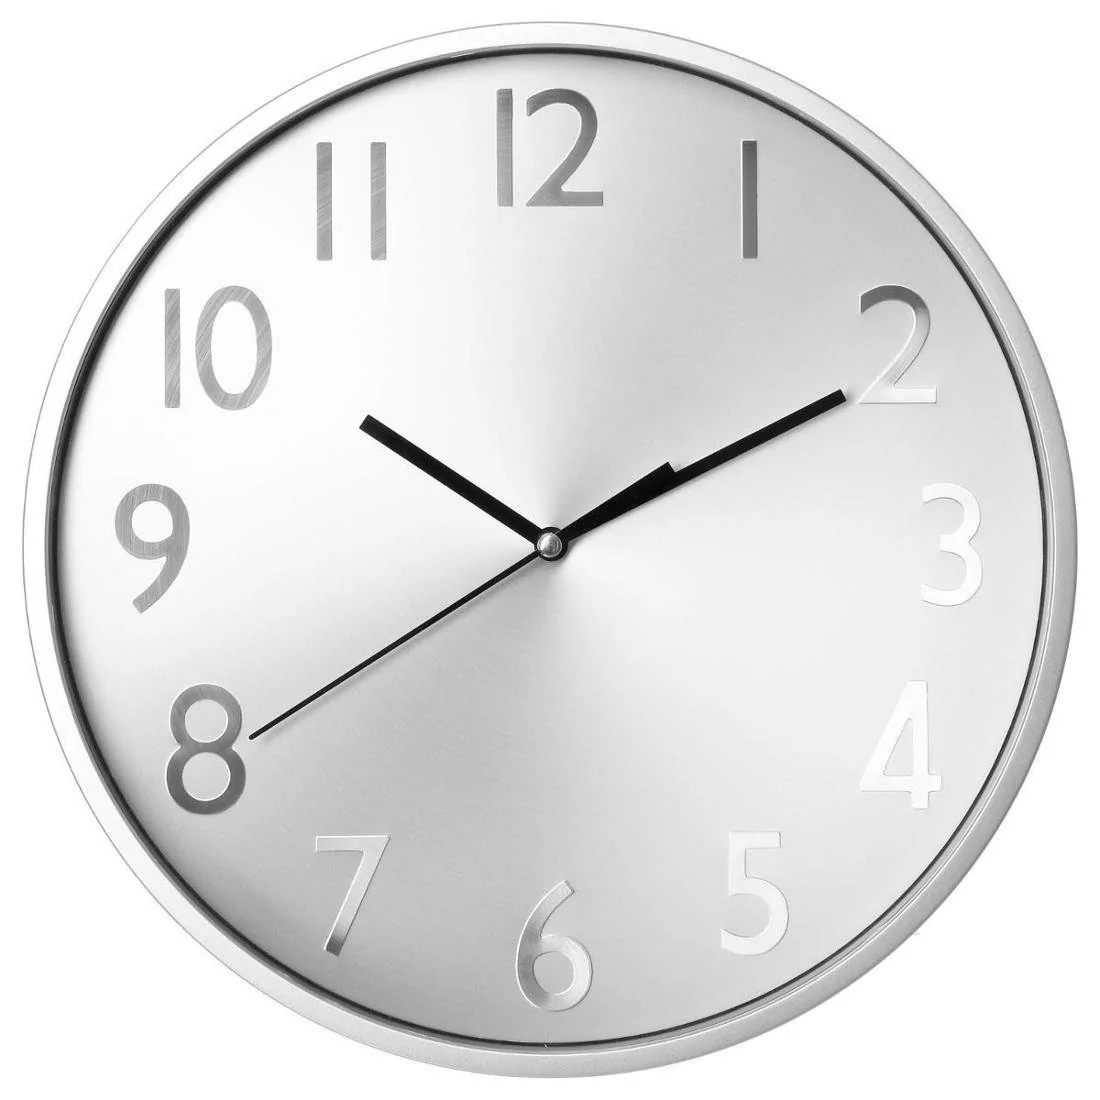 Atmosphera Créateur d'intérieur Atmosphera Créateur dintérieur Okrągły zegar ścienny kolor srebrny 30 cm jja-141133